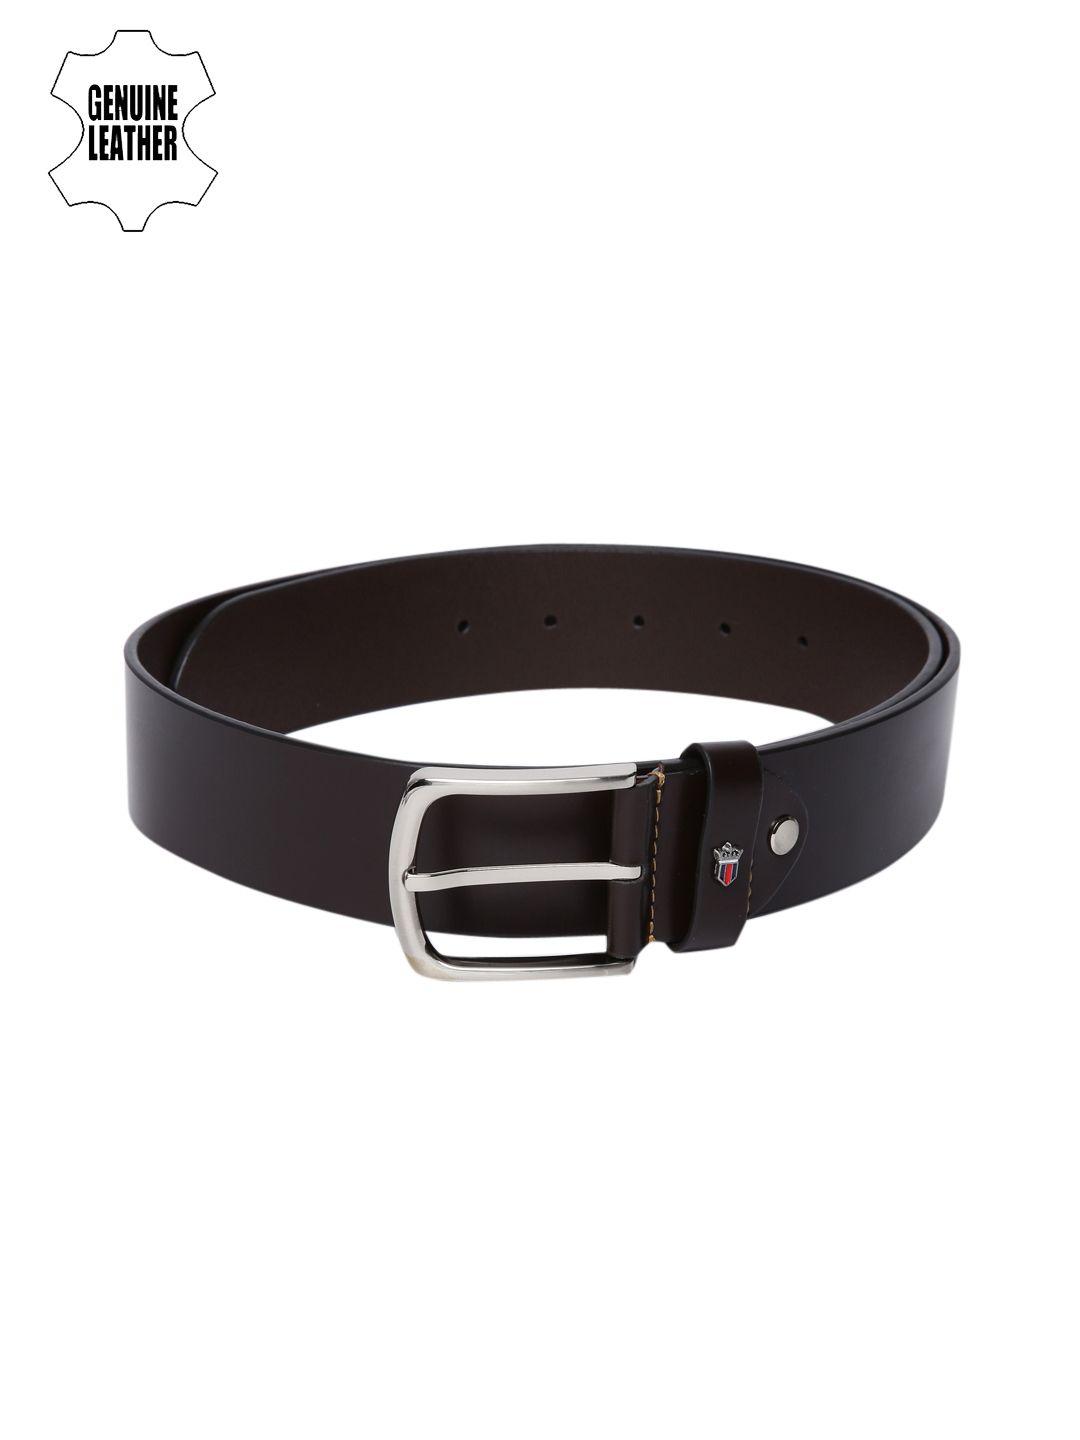 louis philippe men brown genuine leather belt